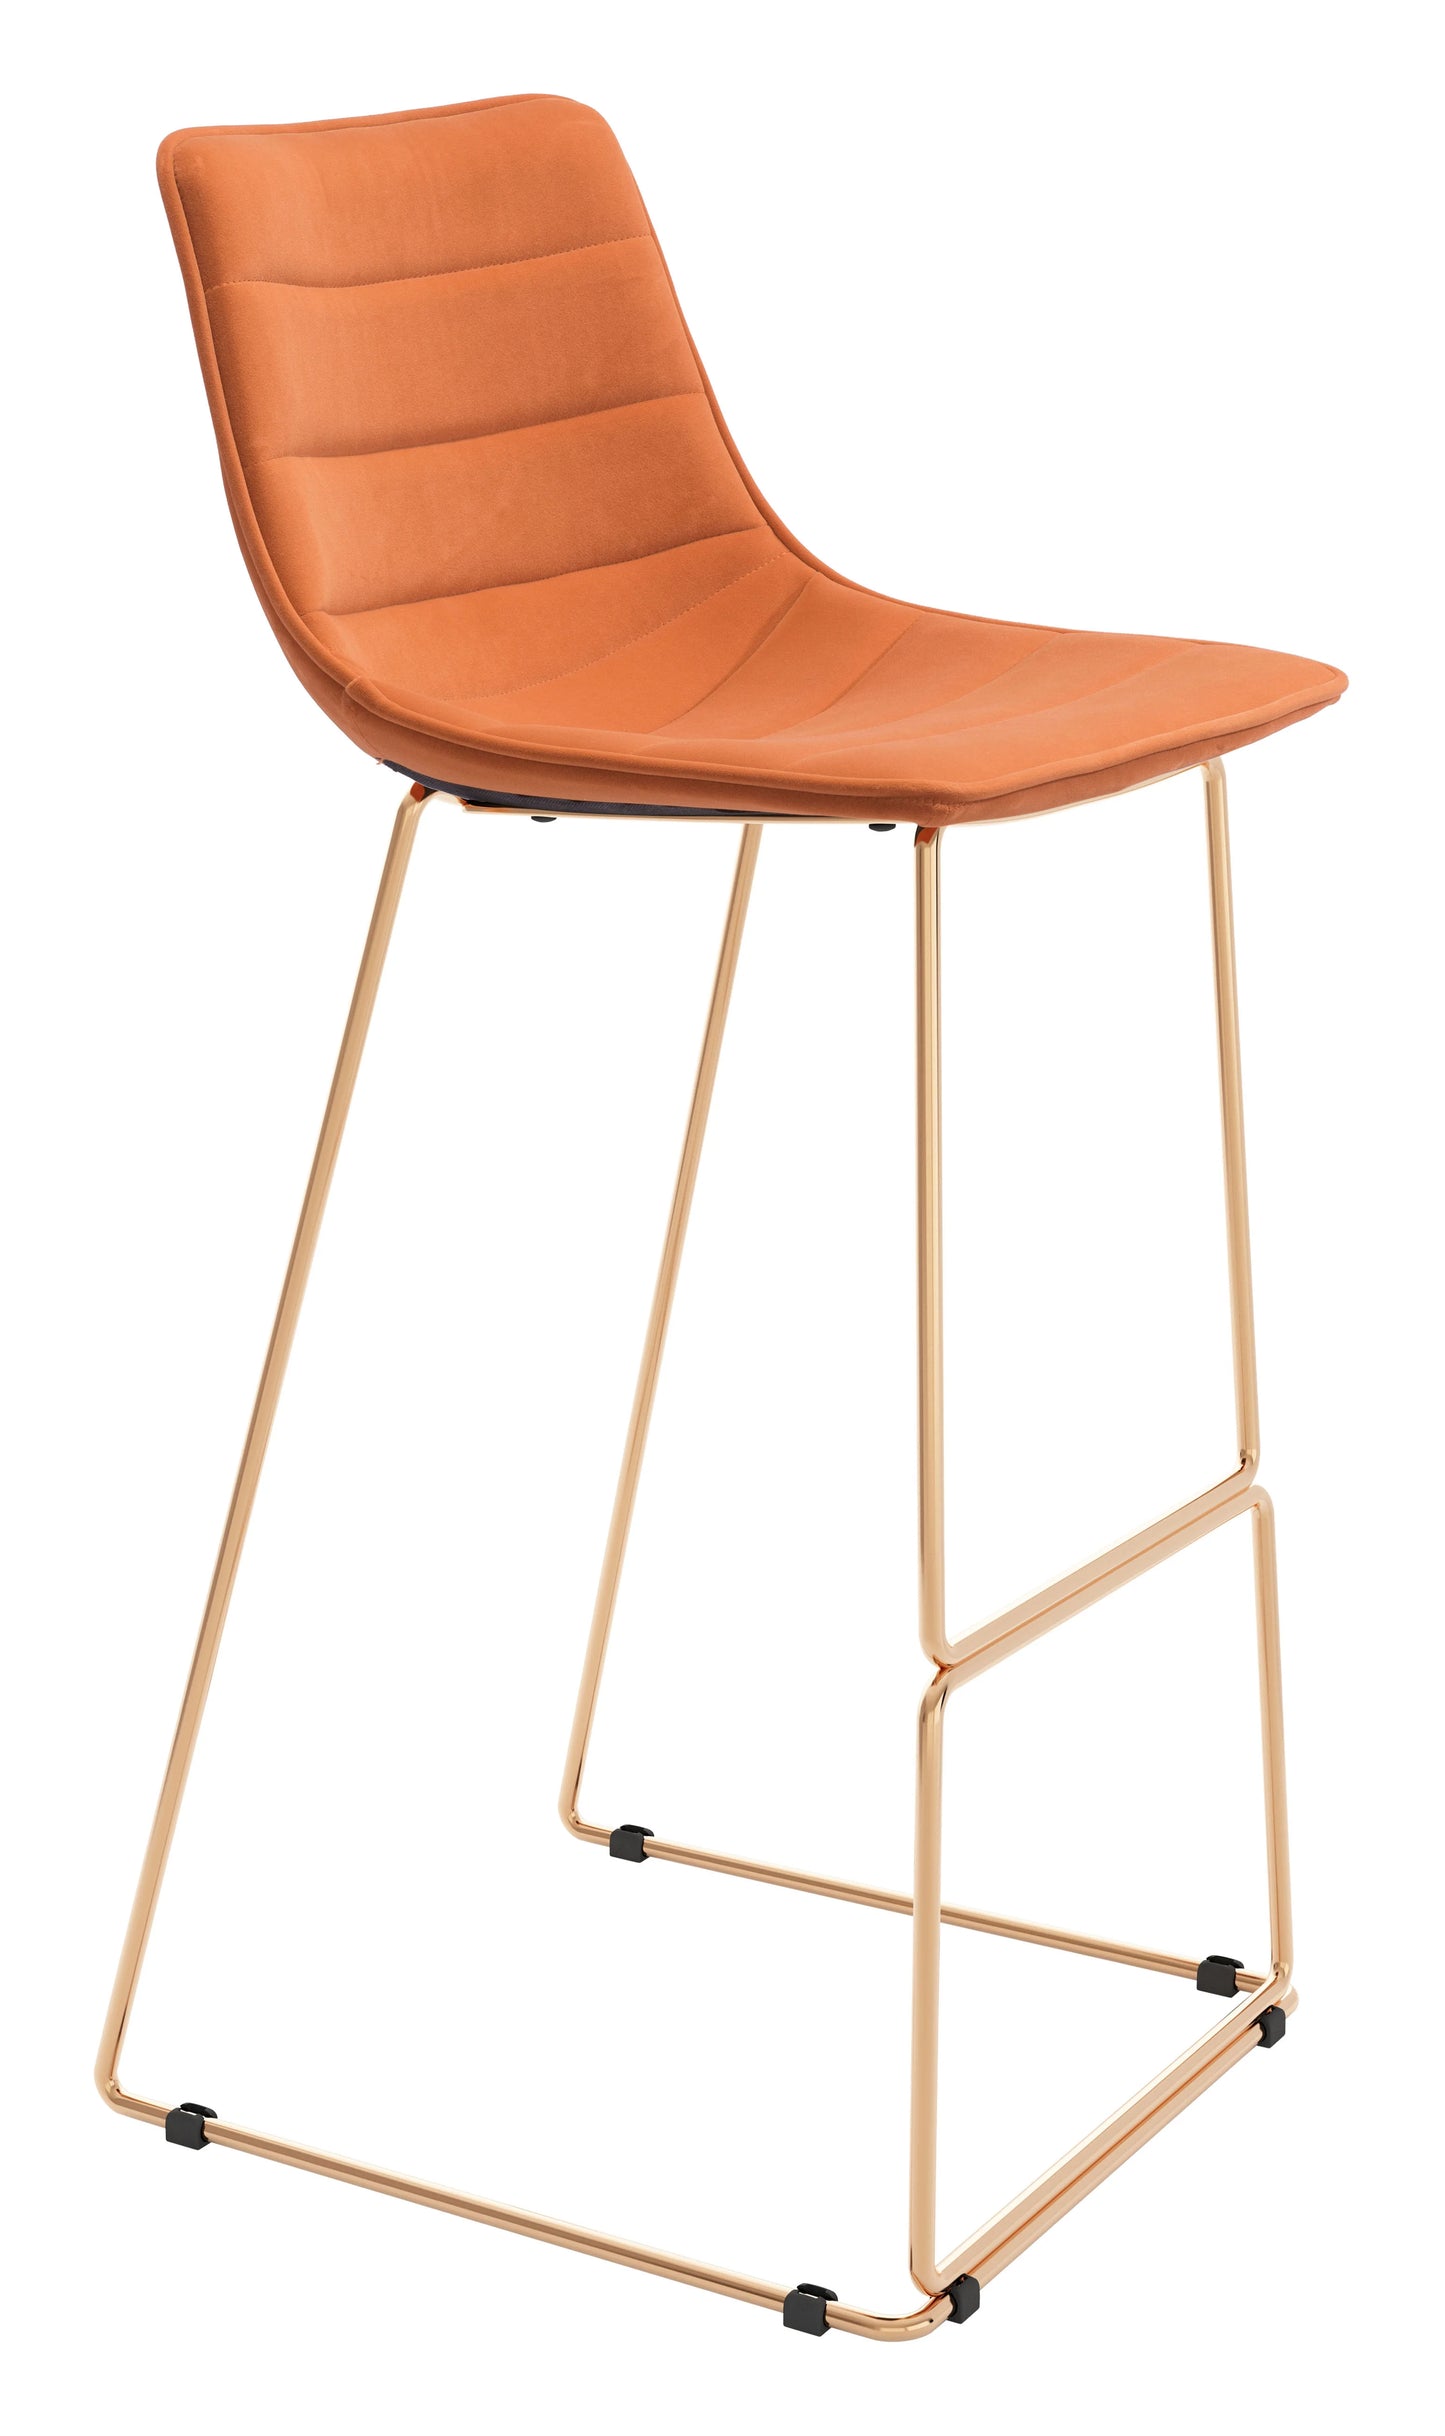 Adele Barstool Orange and Gold modern chair